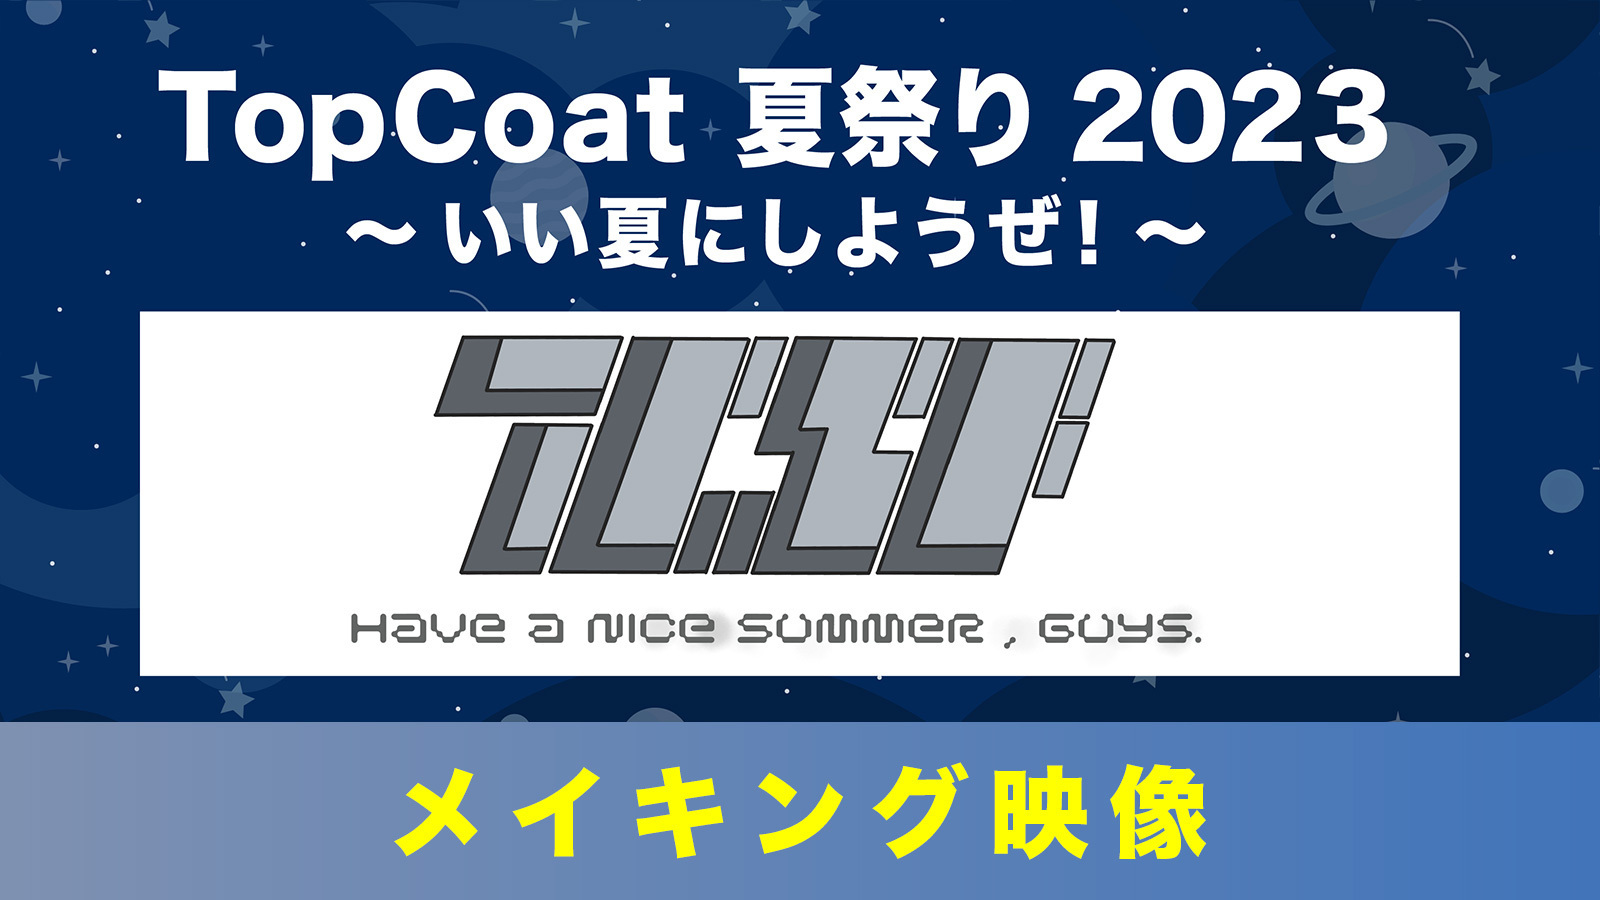 TopCoat夏祭り 2023 〜いい夏にしようぜ！〜 メイキング映像